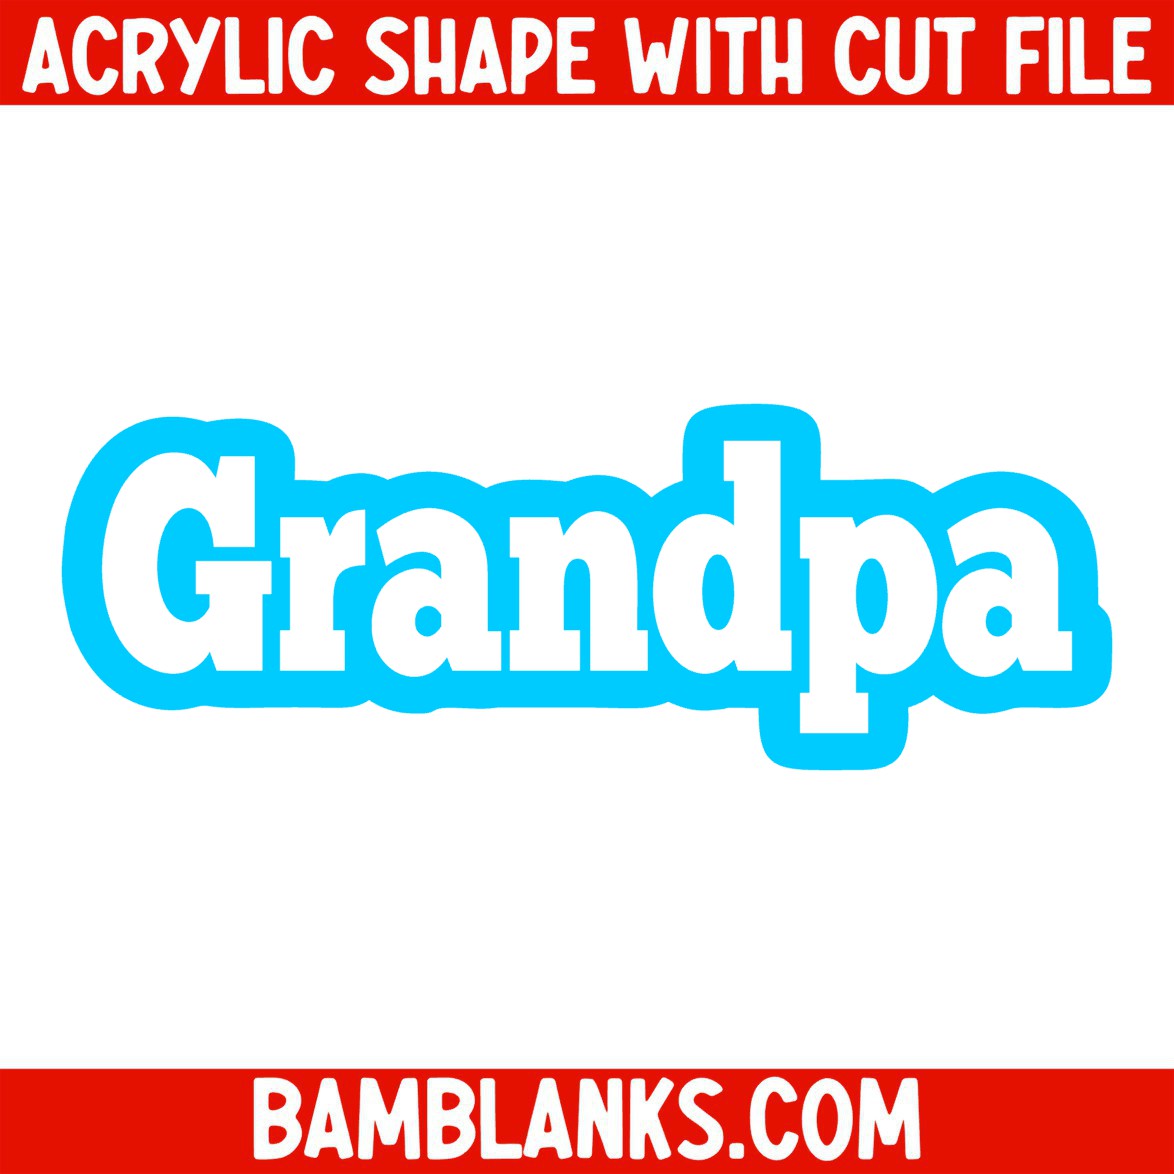 Grandpa - Acrylic Shape #650